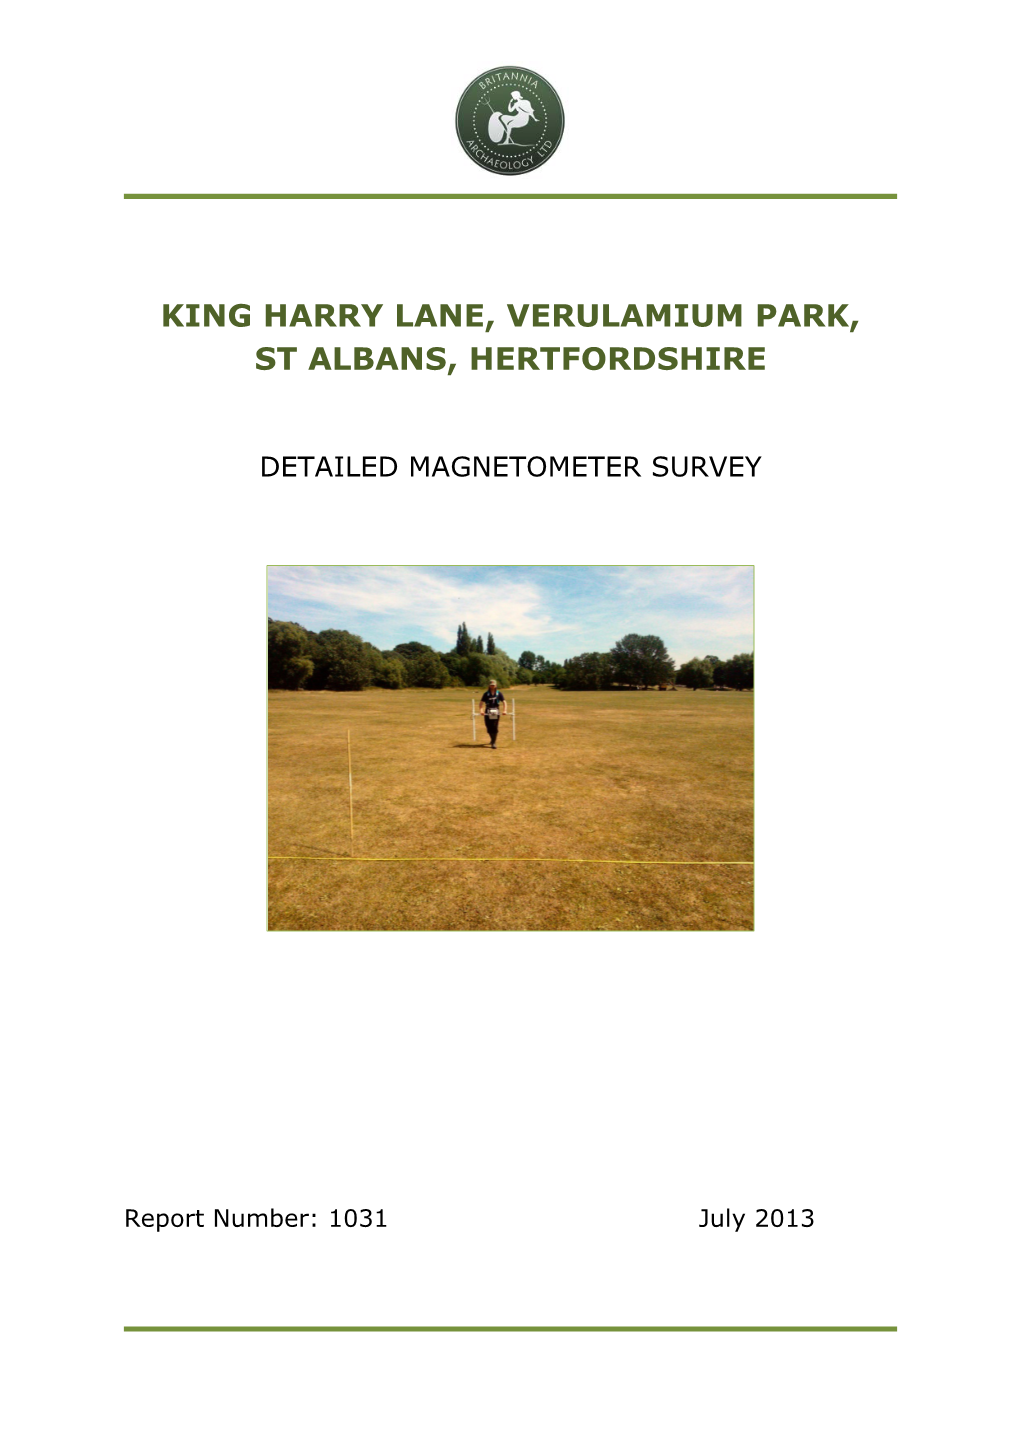 King Harry Lane, Verulamium Park, St Albans, Hertfordshire